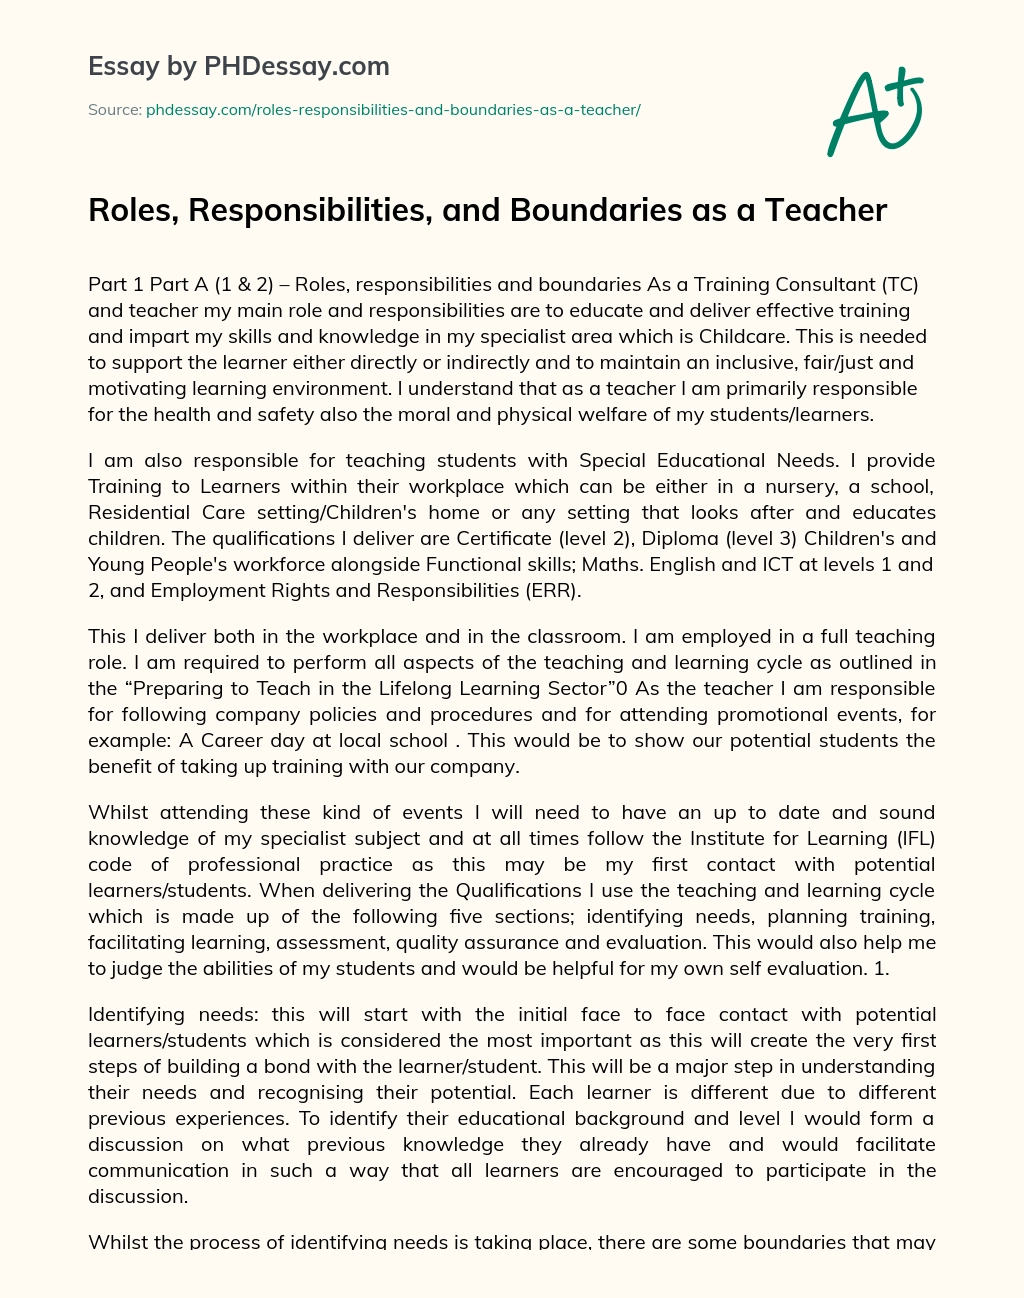 Roles, Responsibilities, and Boundaries as a Teacher essay